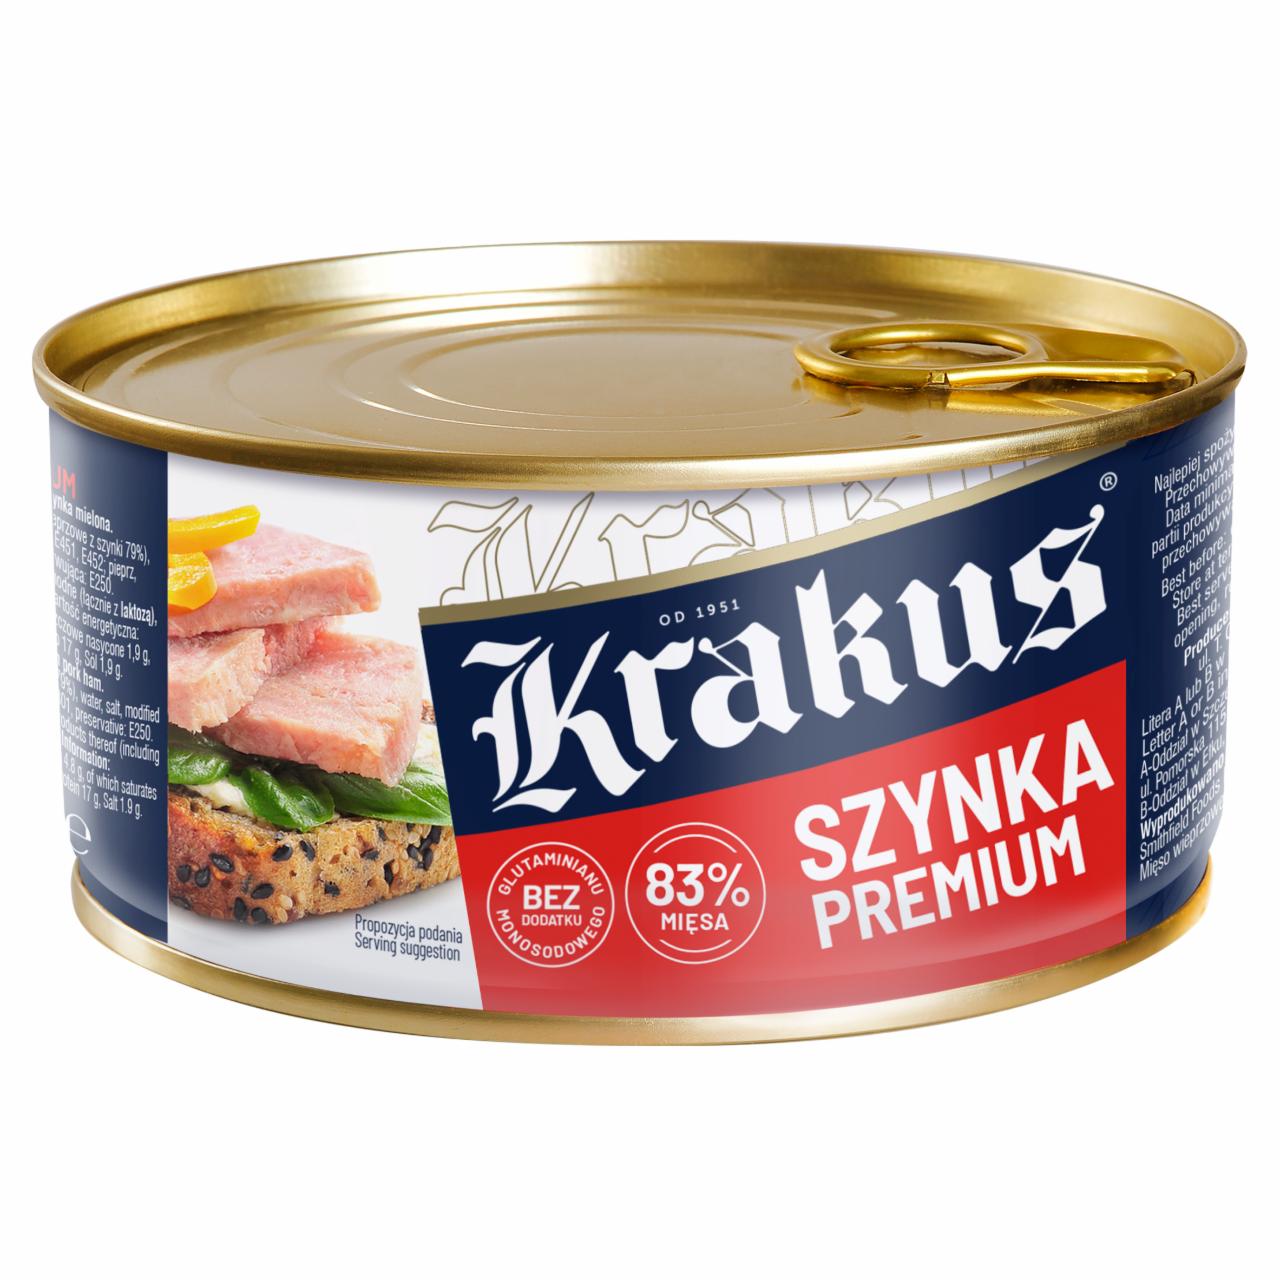 Fotografie - Krakus Premium Ham Preserved Meat